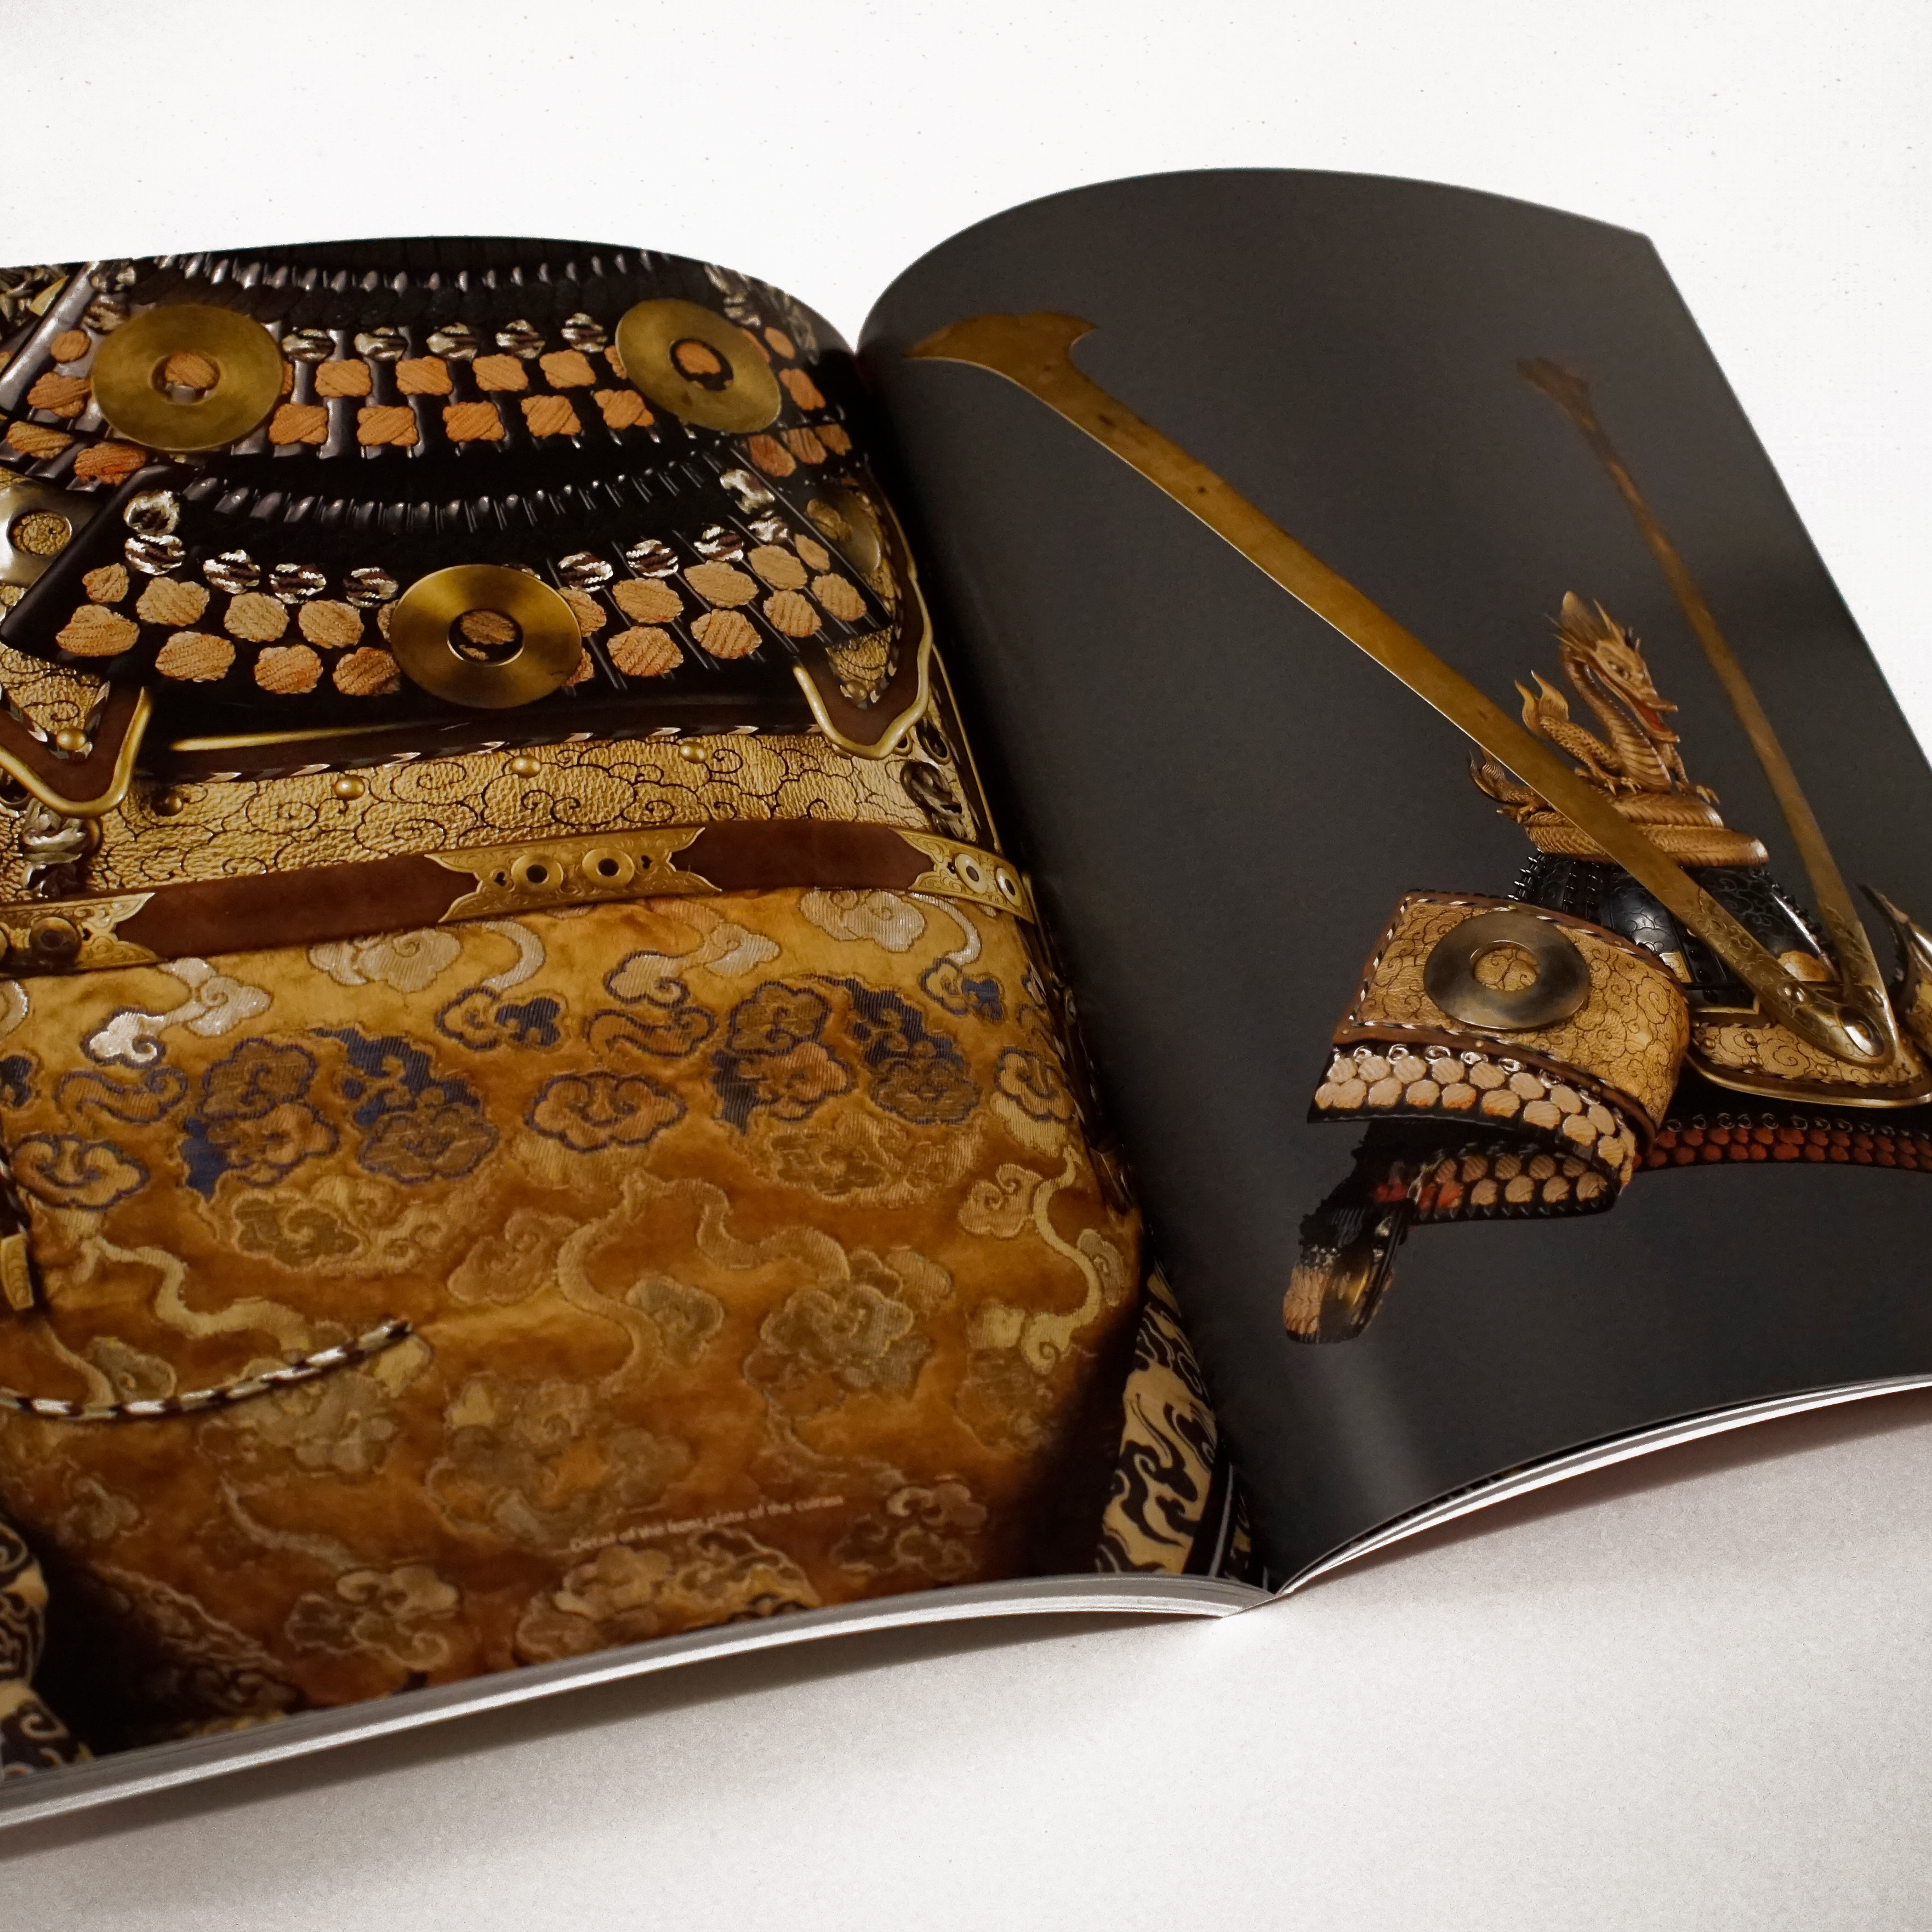 Katalog: „Armours of the Samurai“